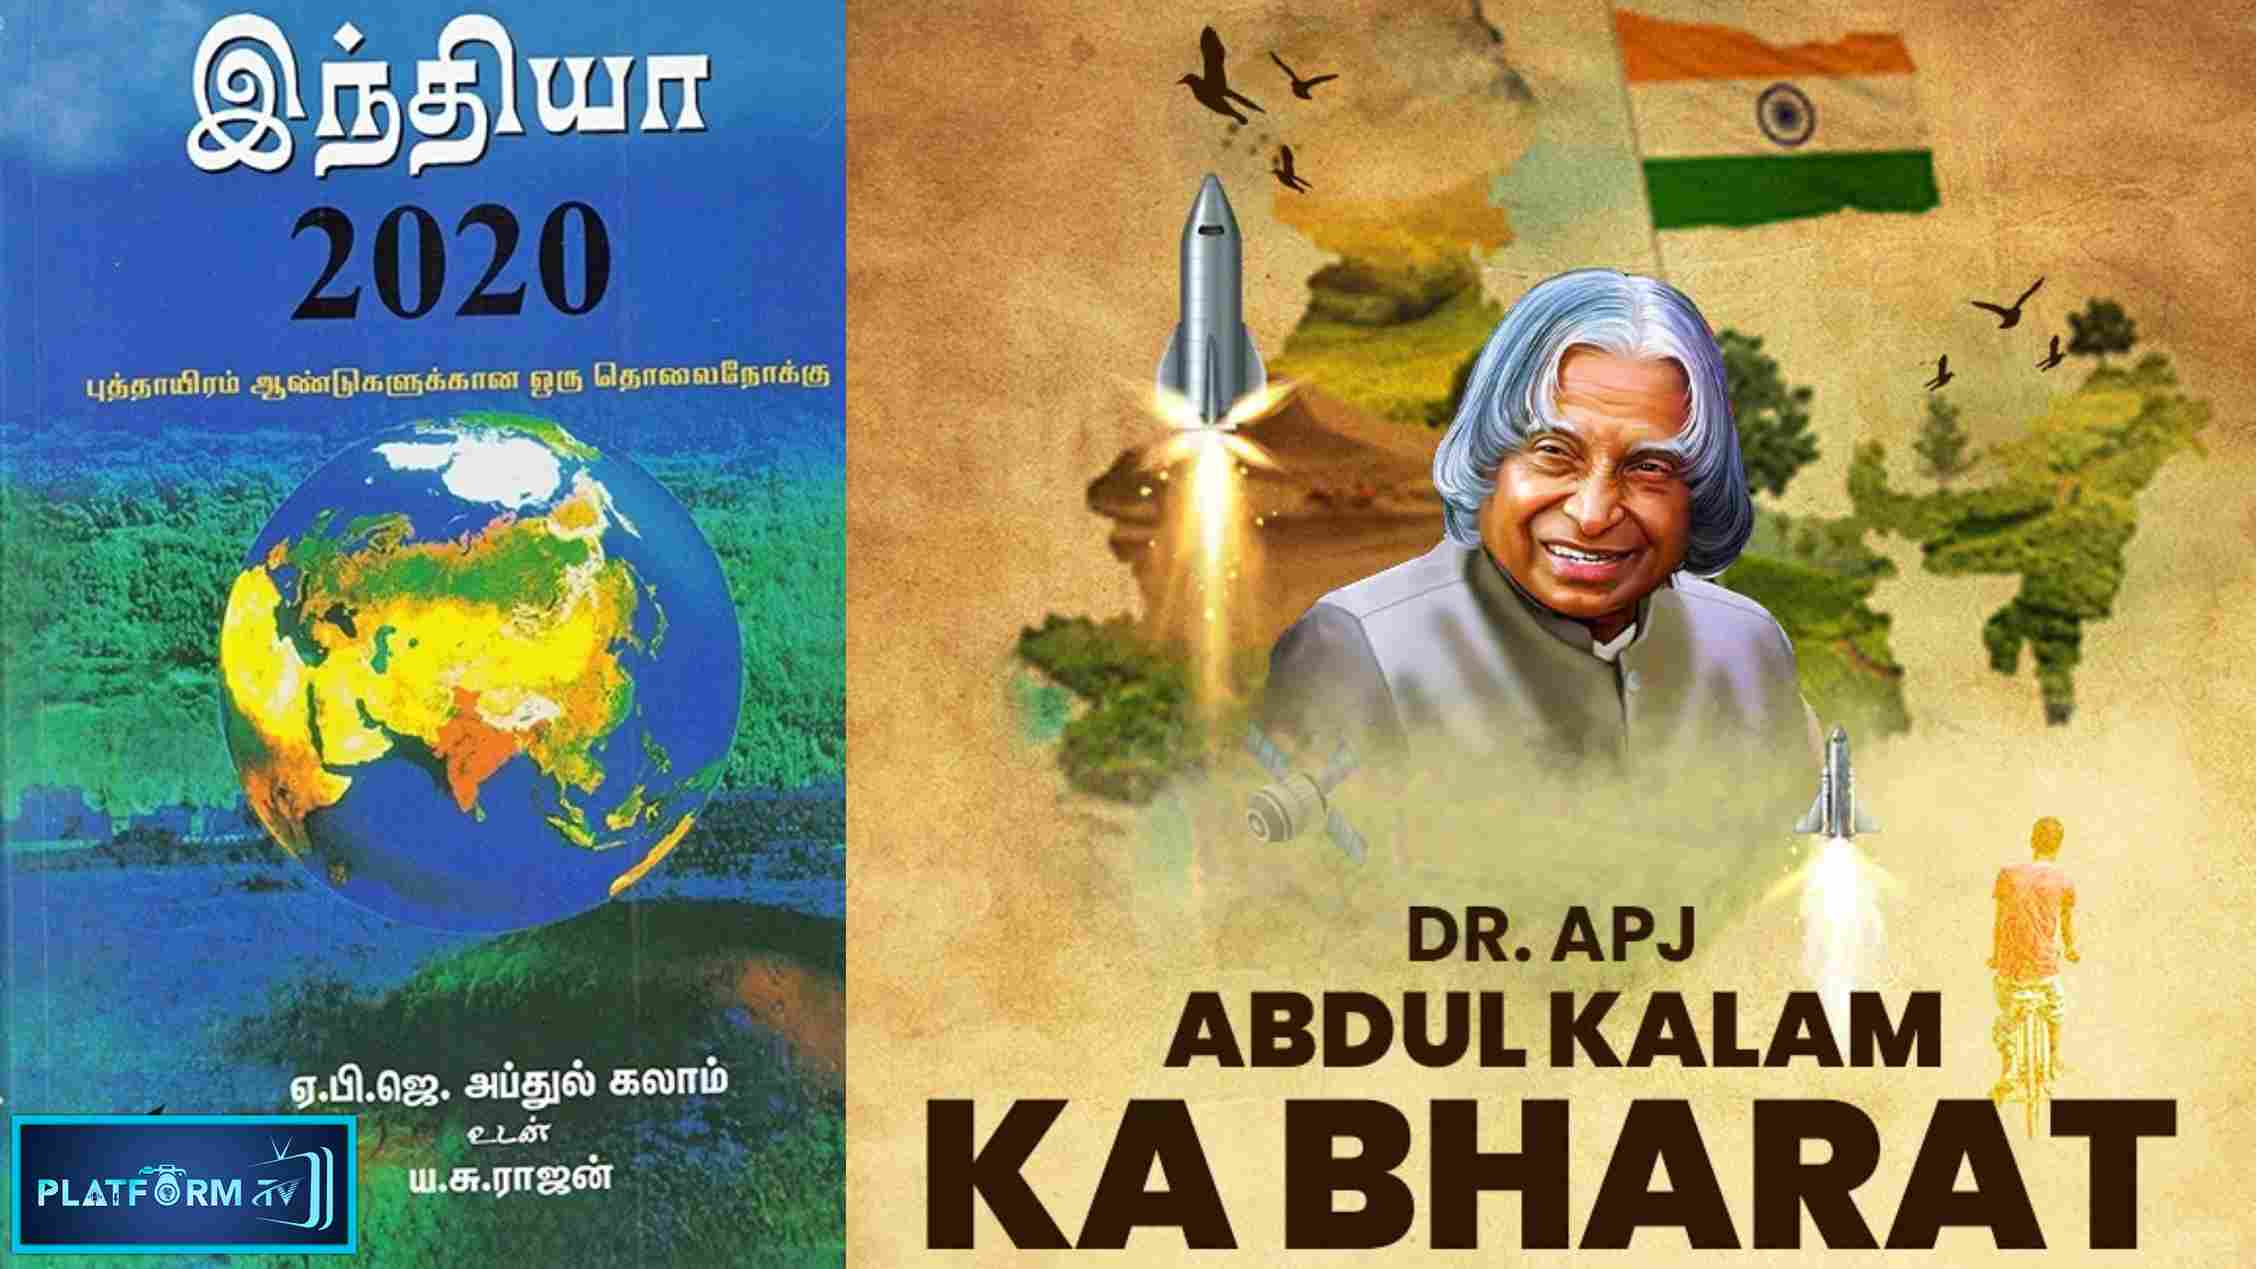 India 2020 Book - Platform Tamil